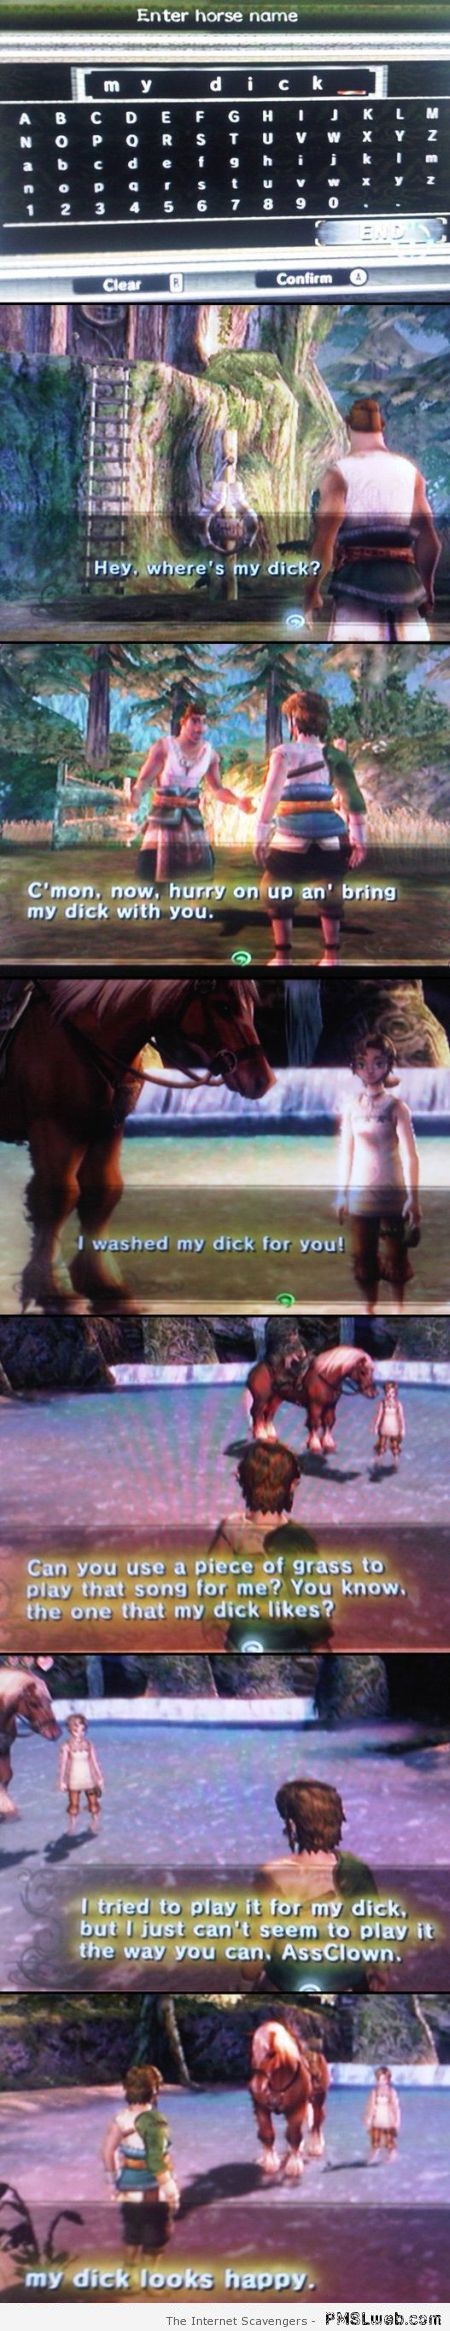 Funny horse video game prank at PMSLweb.com